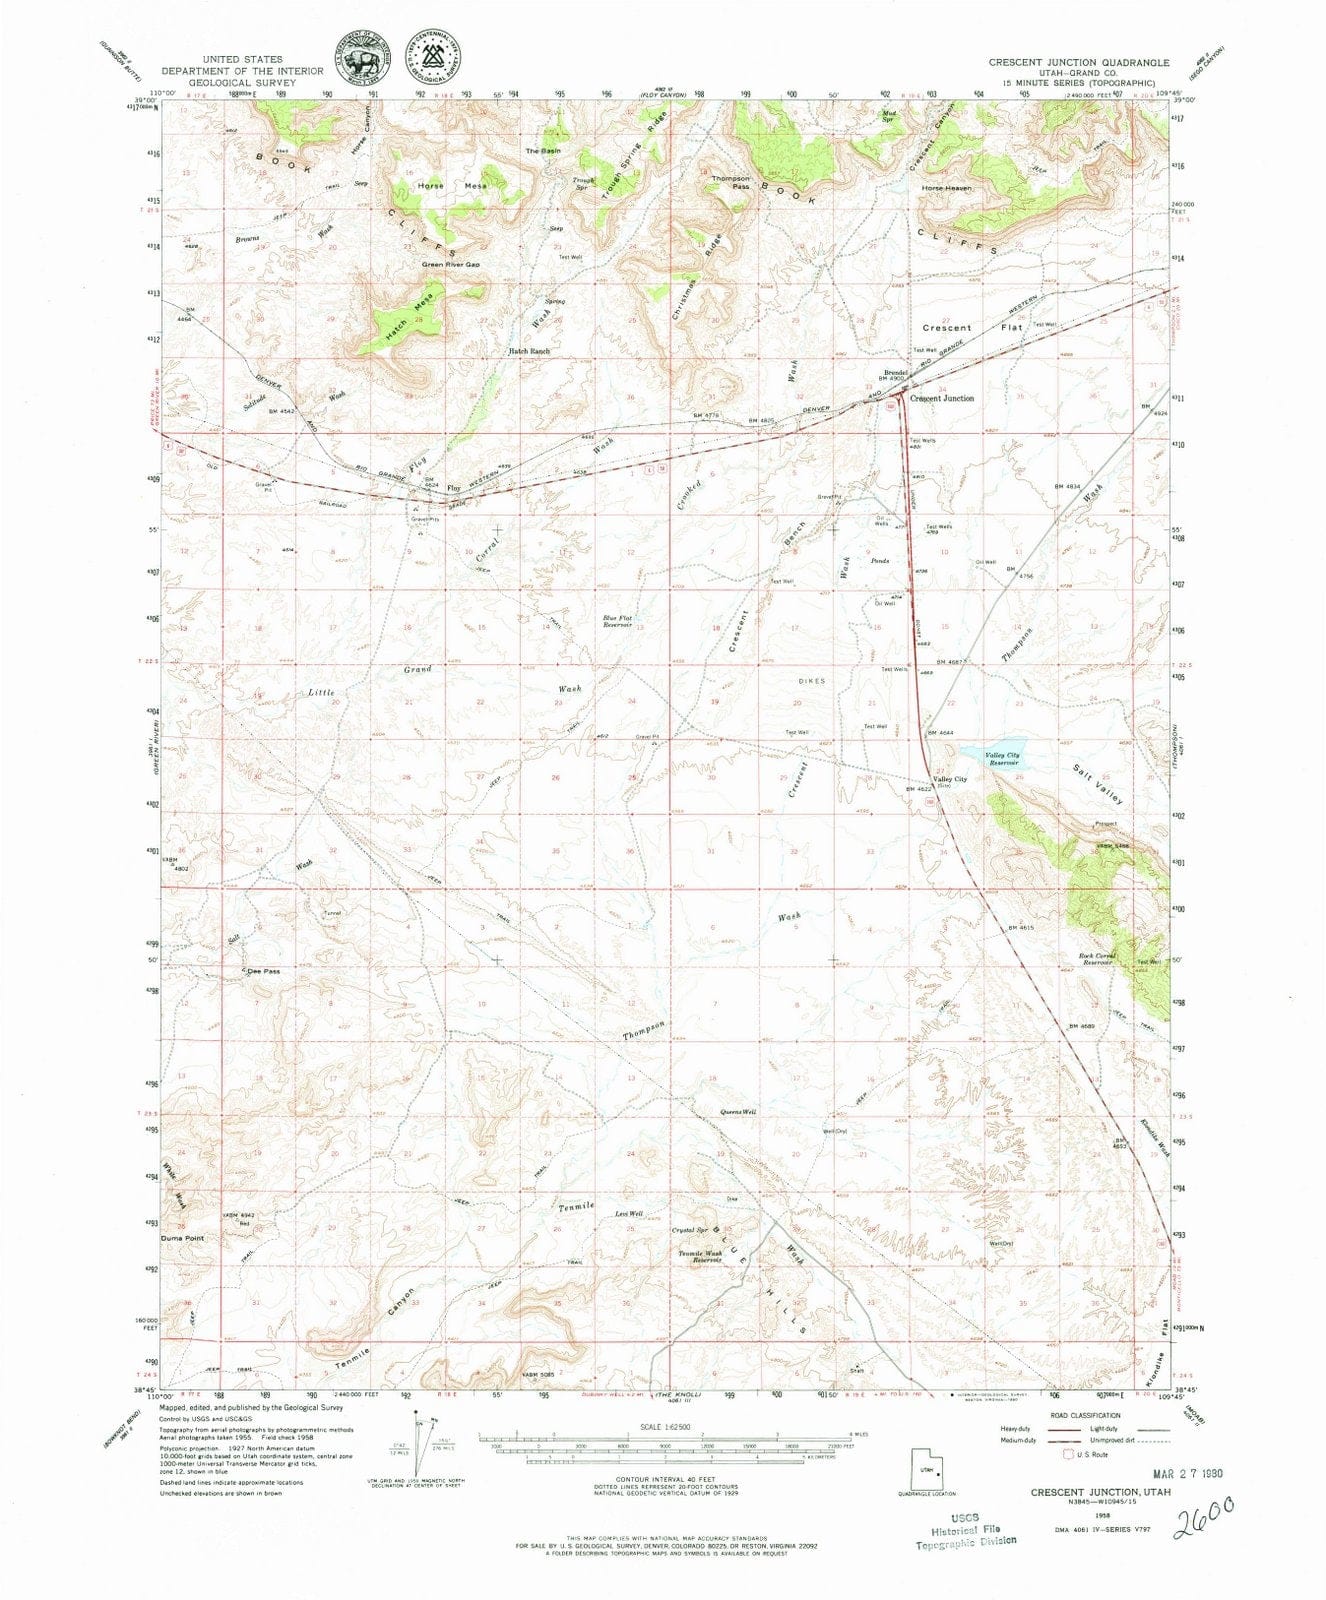 1958 Crescent Junction, UT - Utah - USGS Topographic Map